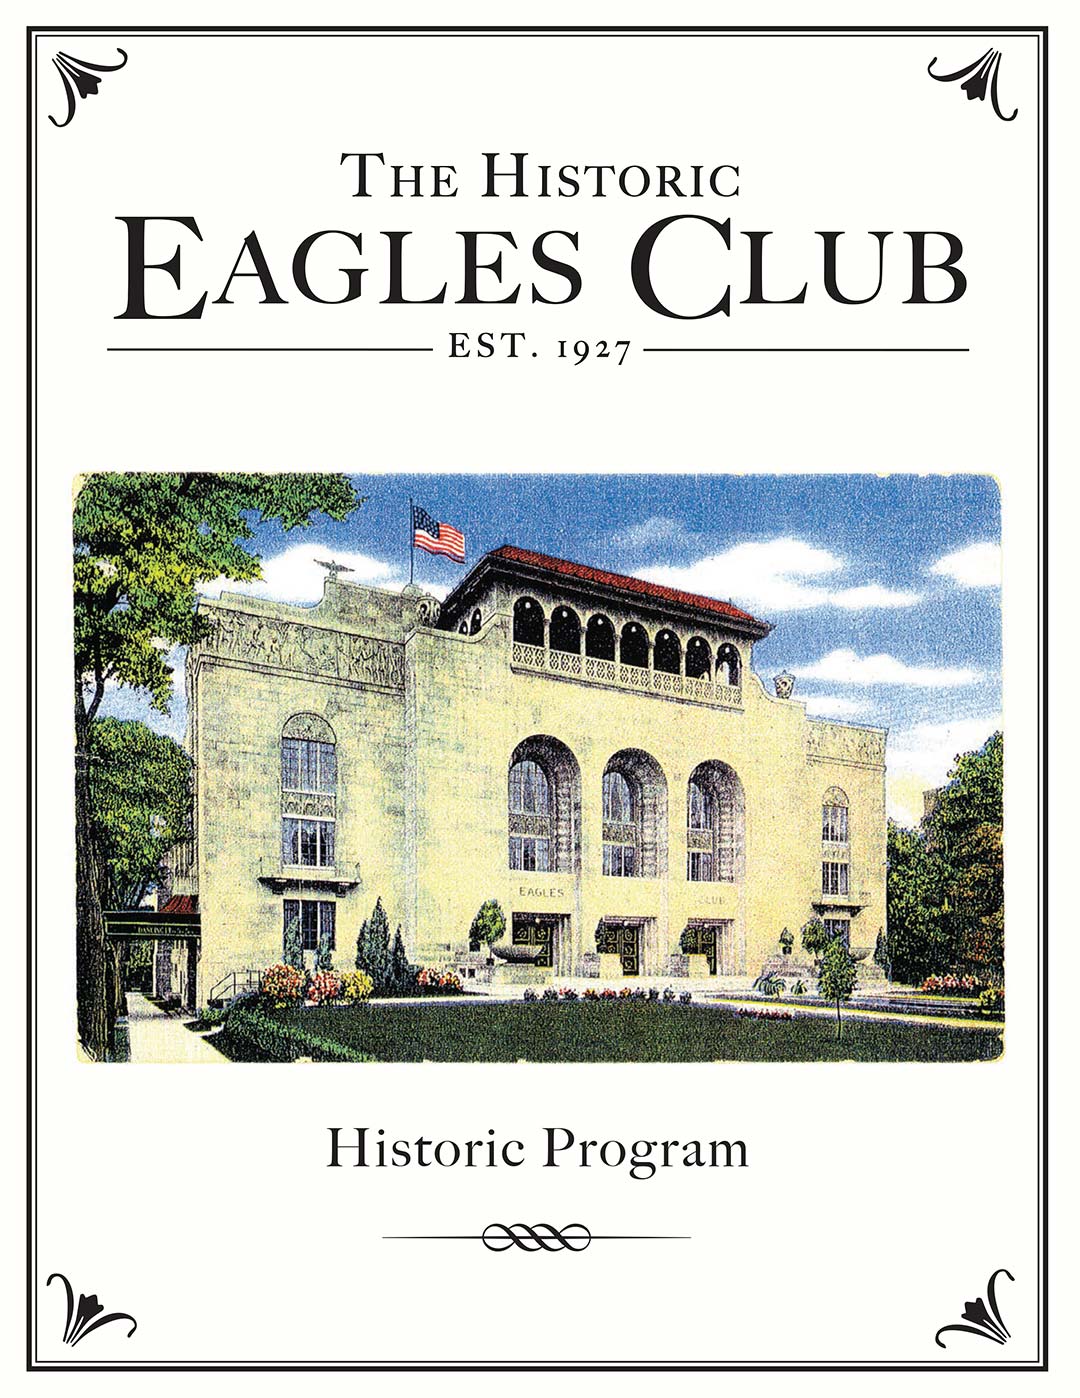 The Eagles Club Historic Program